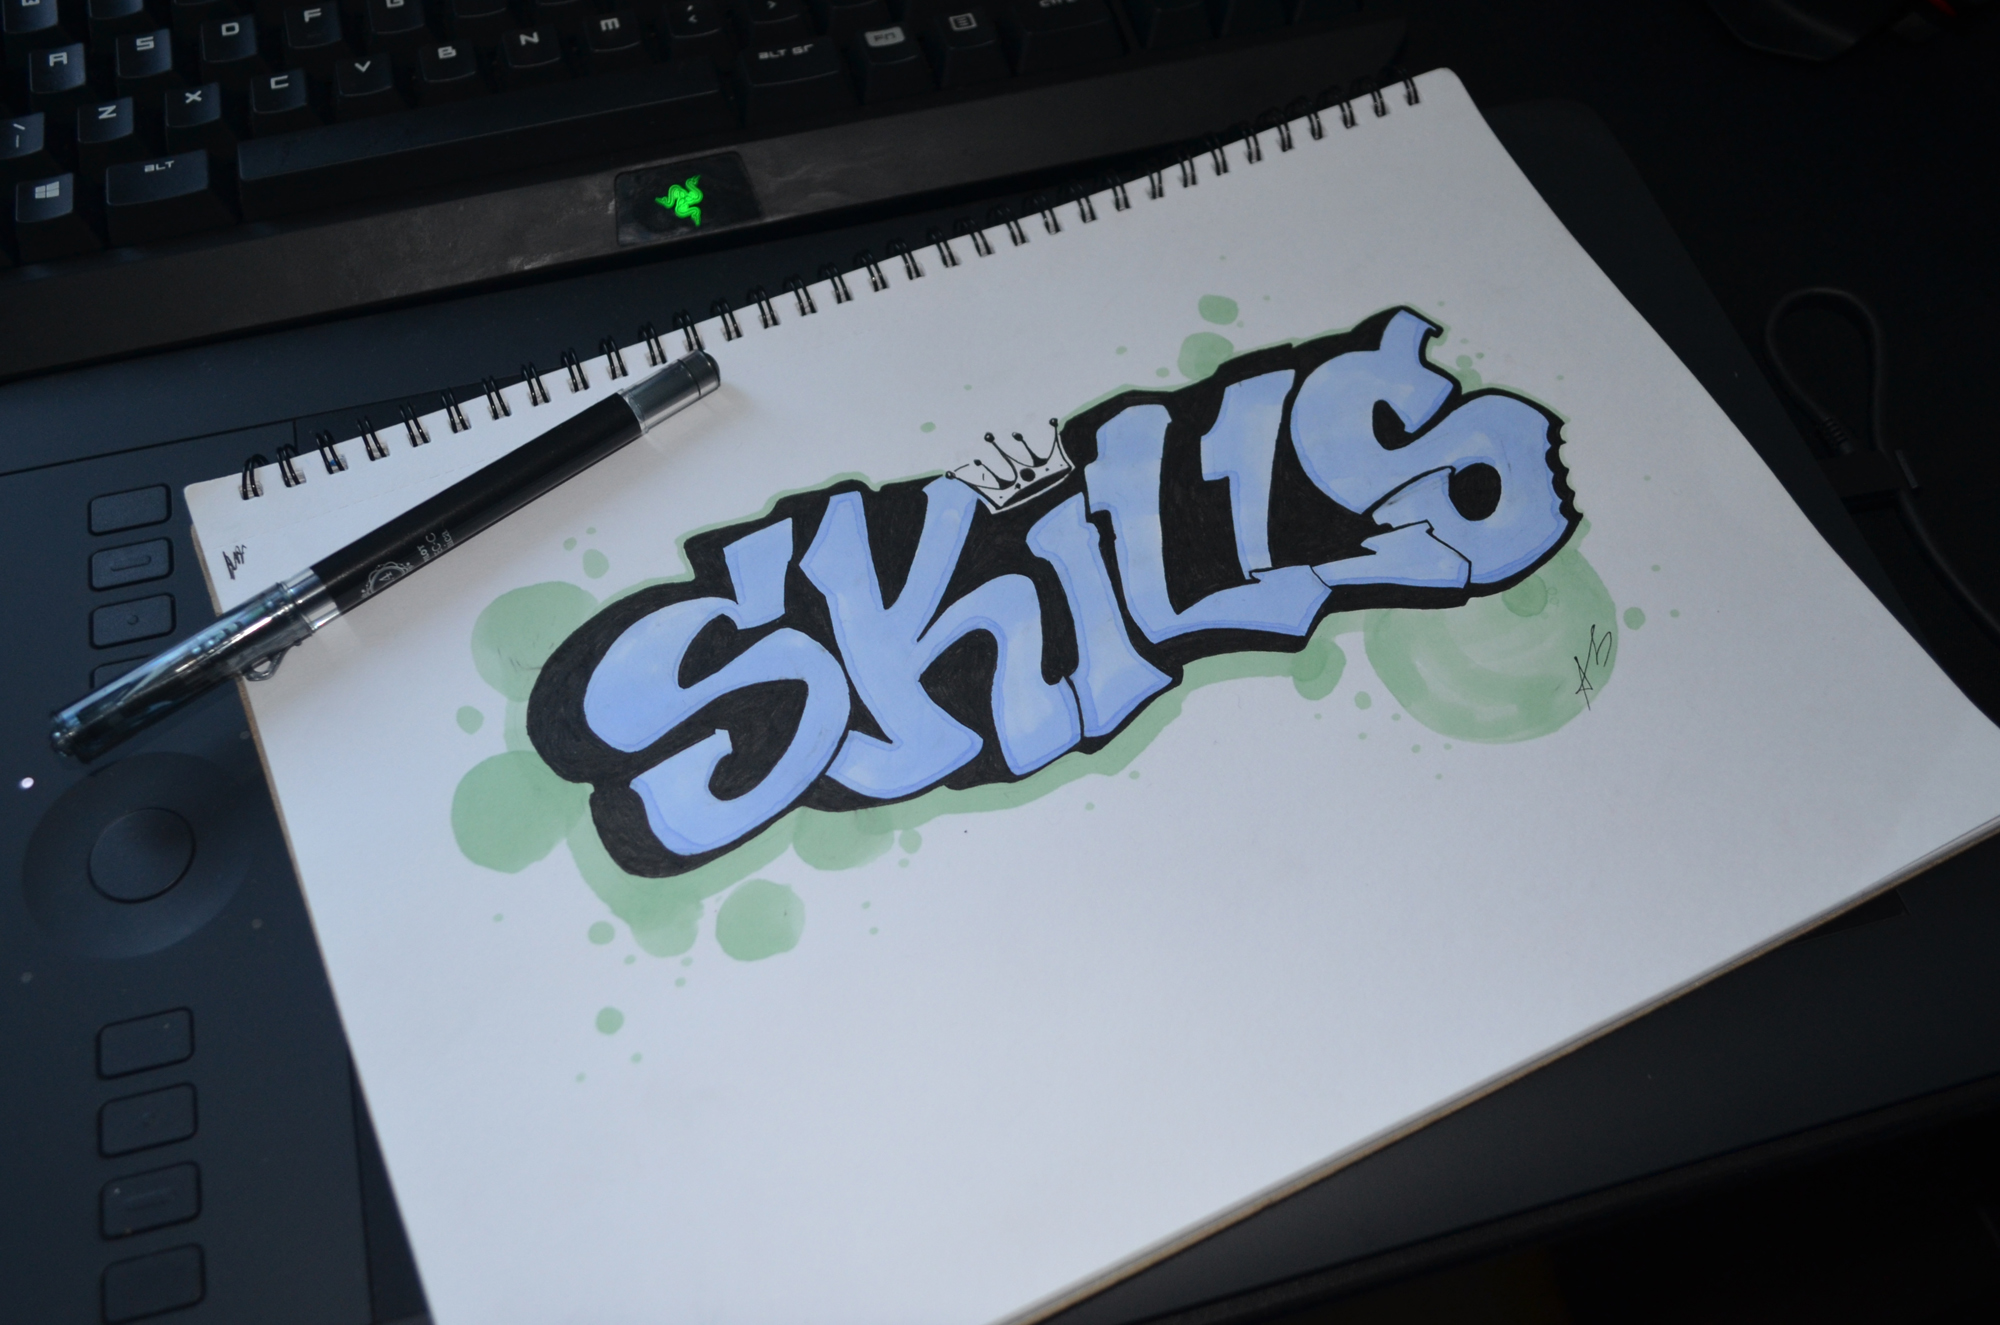 Skills - Graffiti doodle